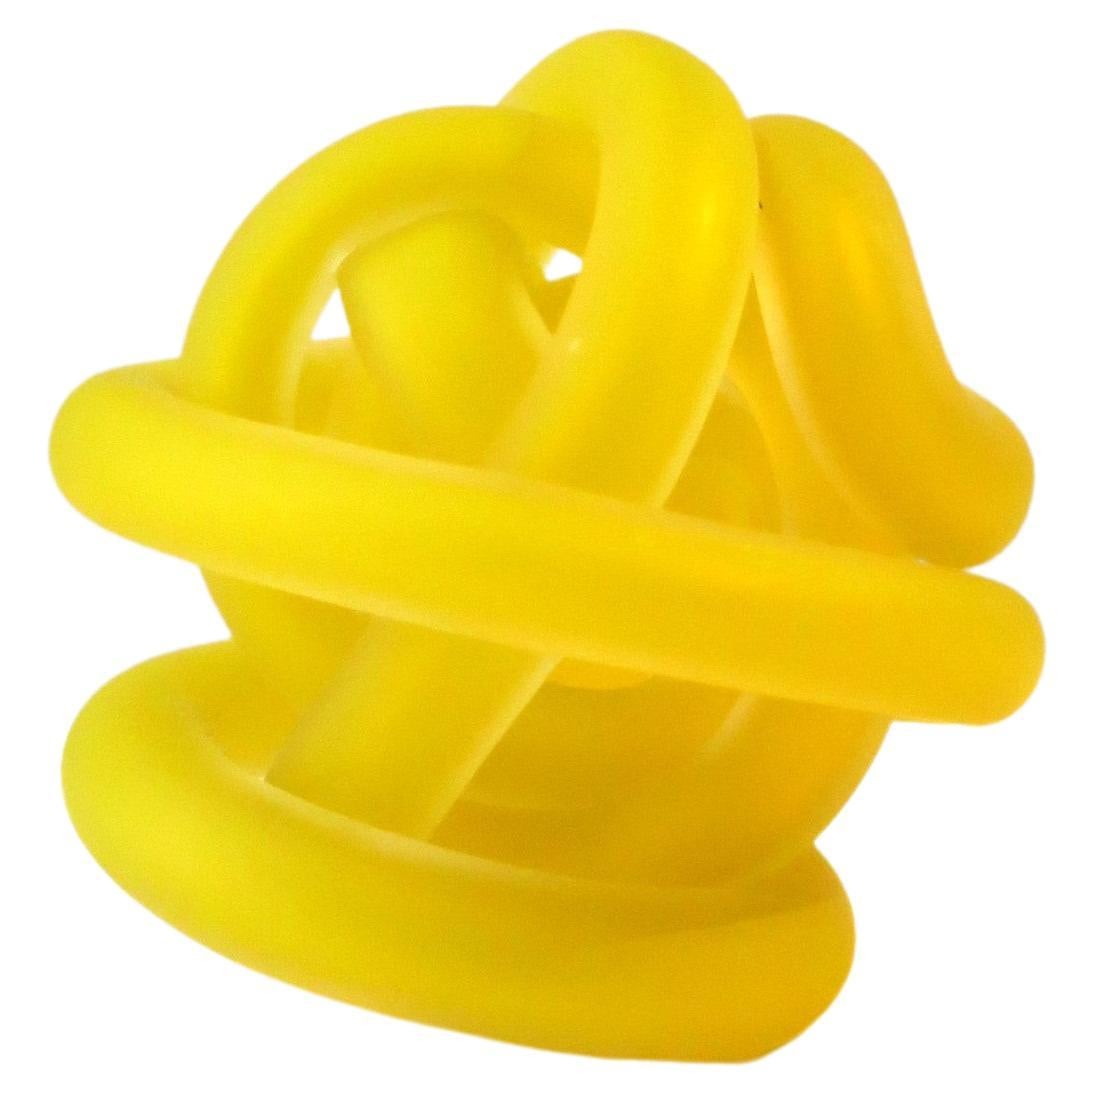 Yellow Art Glass Knot Sculpture Decorative Object